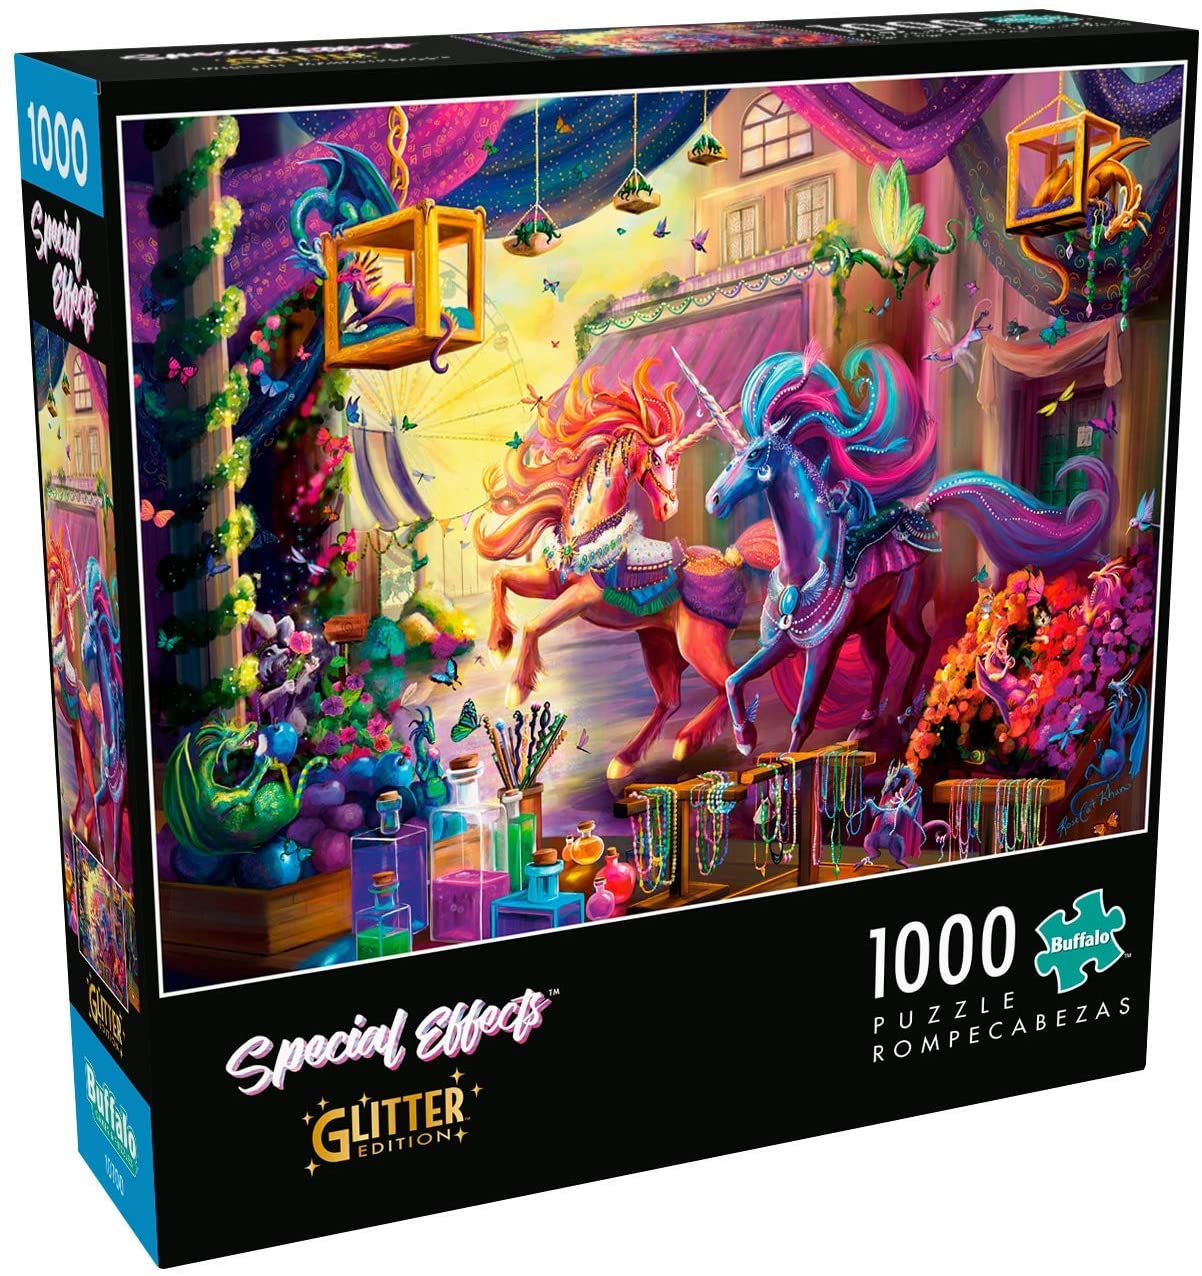 1000-Piece Buffalo Games Twilight Marketplace Glitter Edition Jigsaw Puzzle $6.97 + FS w/ Amazon Prime or FS on $25+